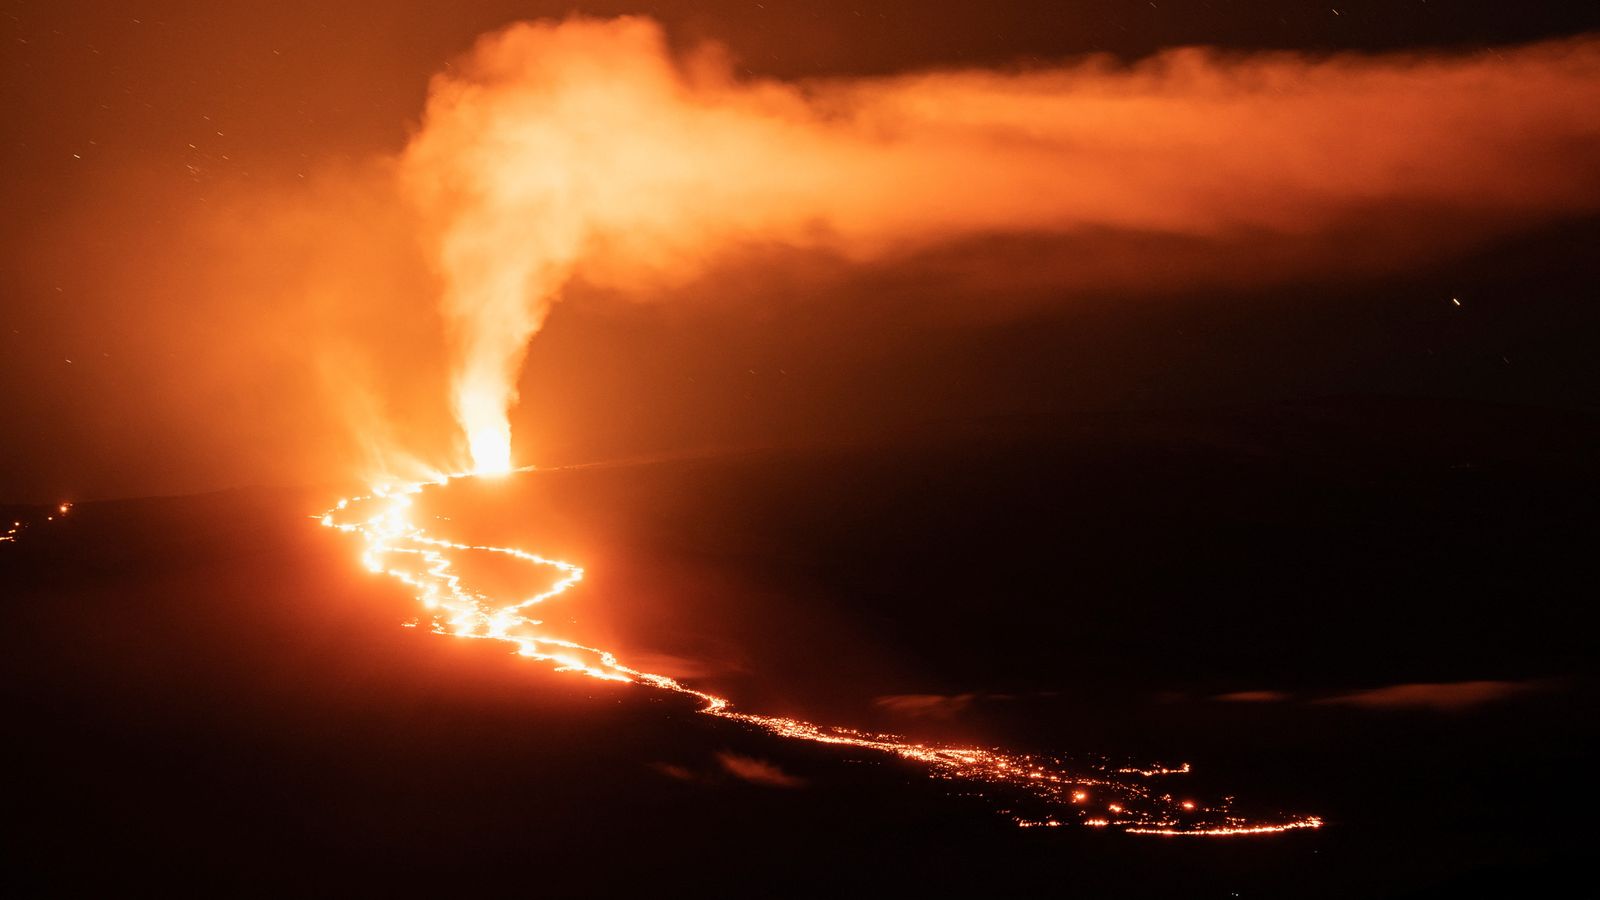 Molten lava threatens to block key road as tourists flock to Hawaiian volcano